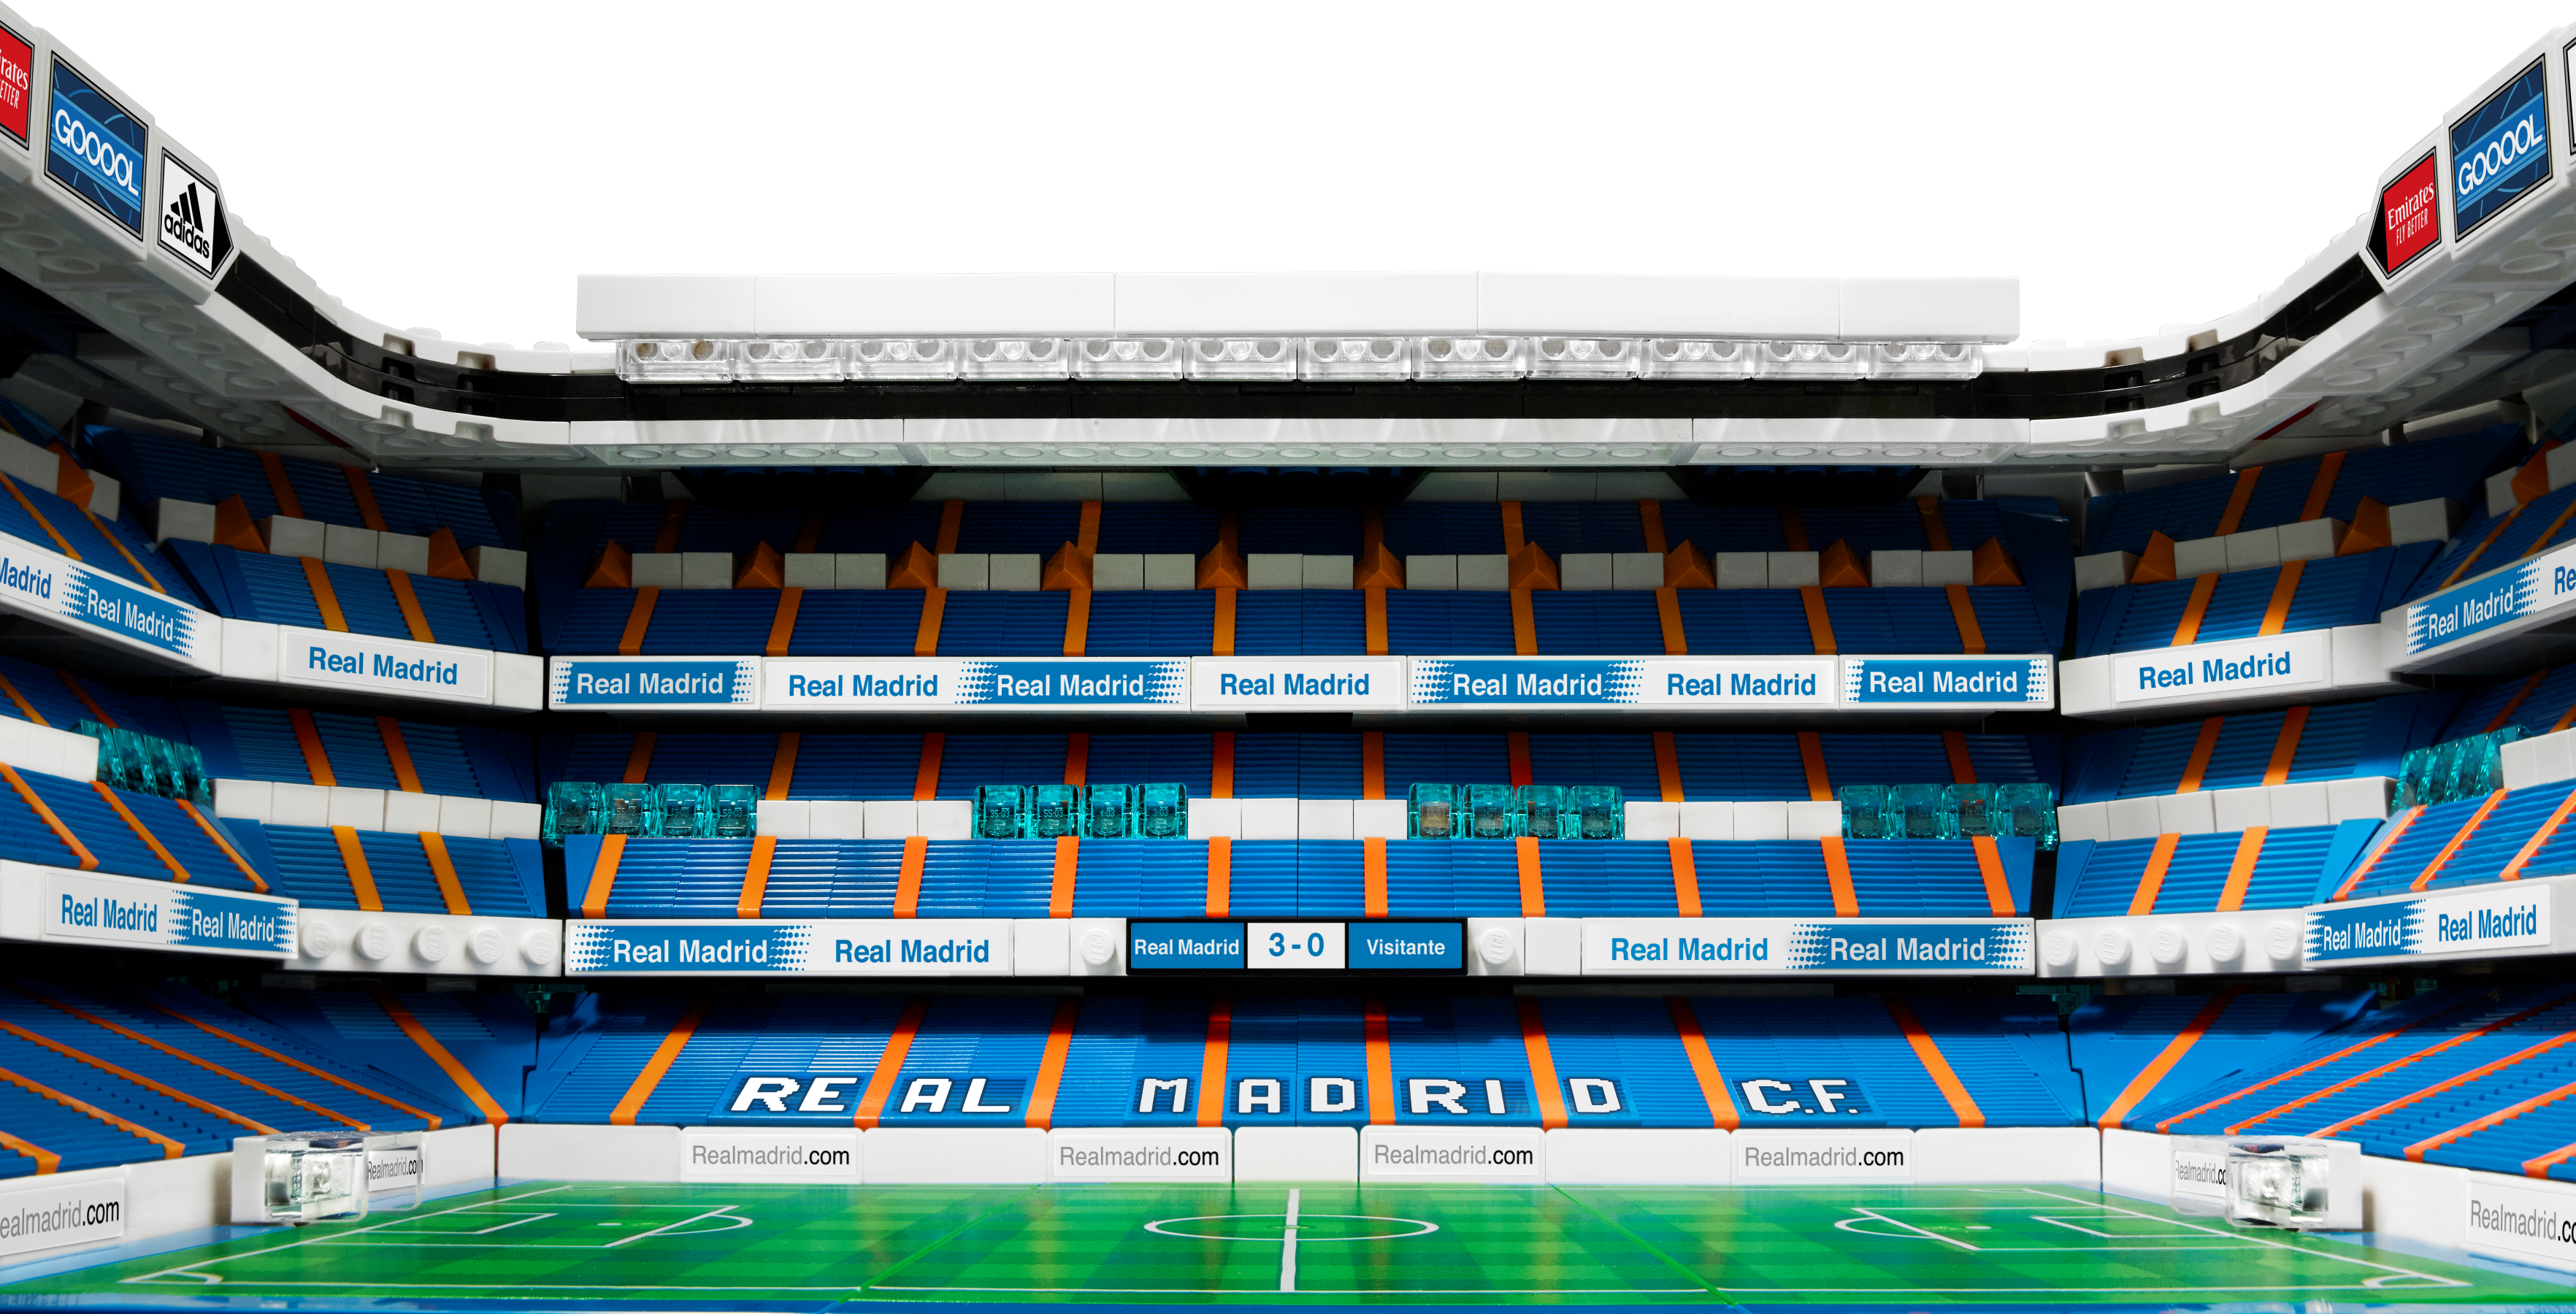 LEGO Creator Expert 10299 Real Madrid - Santiago Bernabéu Stadium Speed  Build - AustrianBrickFan 